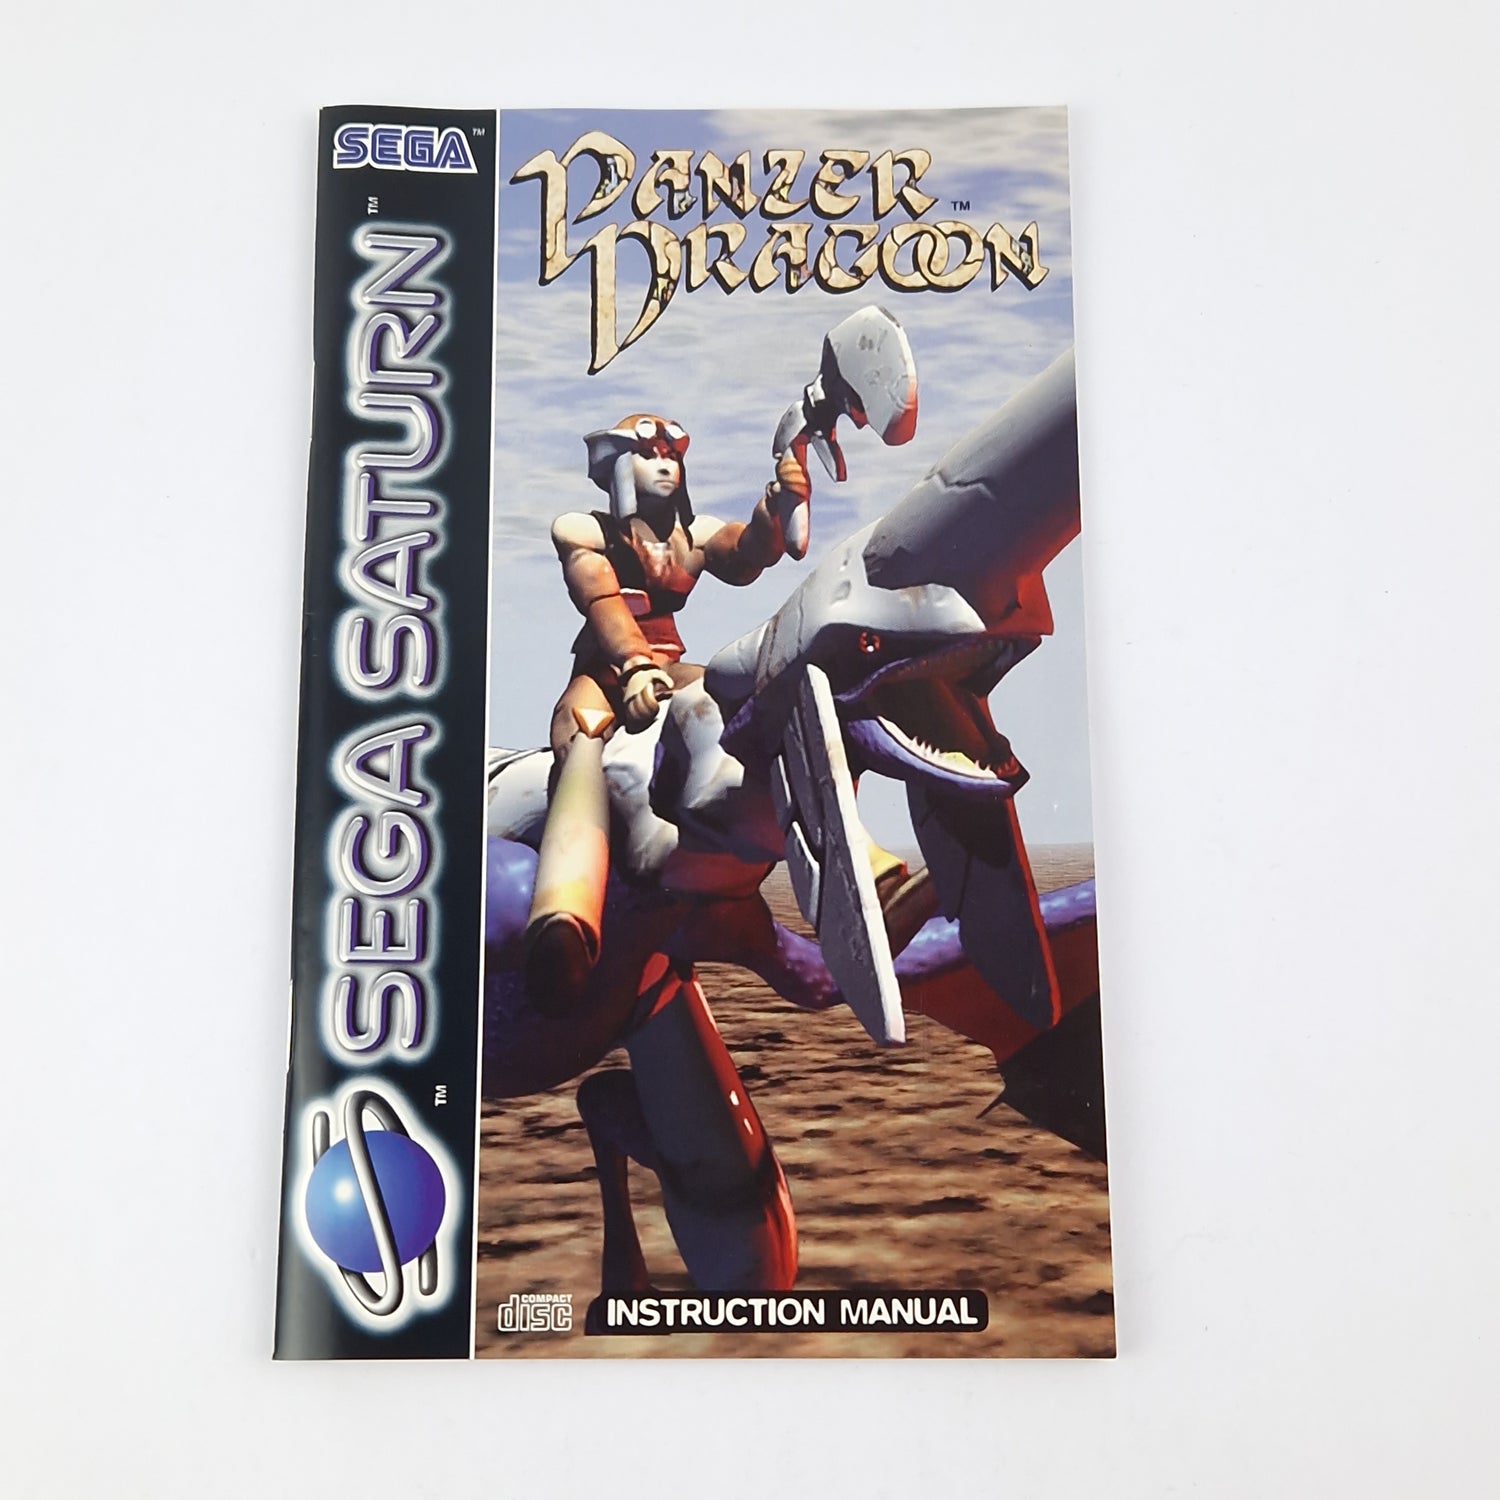 Sega Saturn Game: Panzer Dragoon - CD Instructions OVP cib | PAL Disk Game